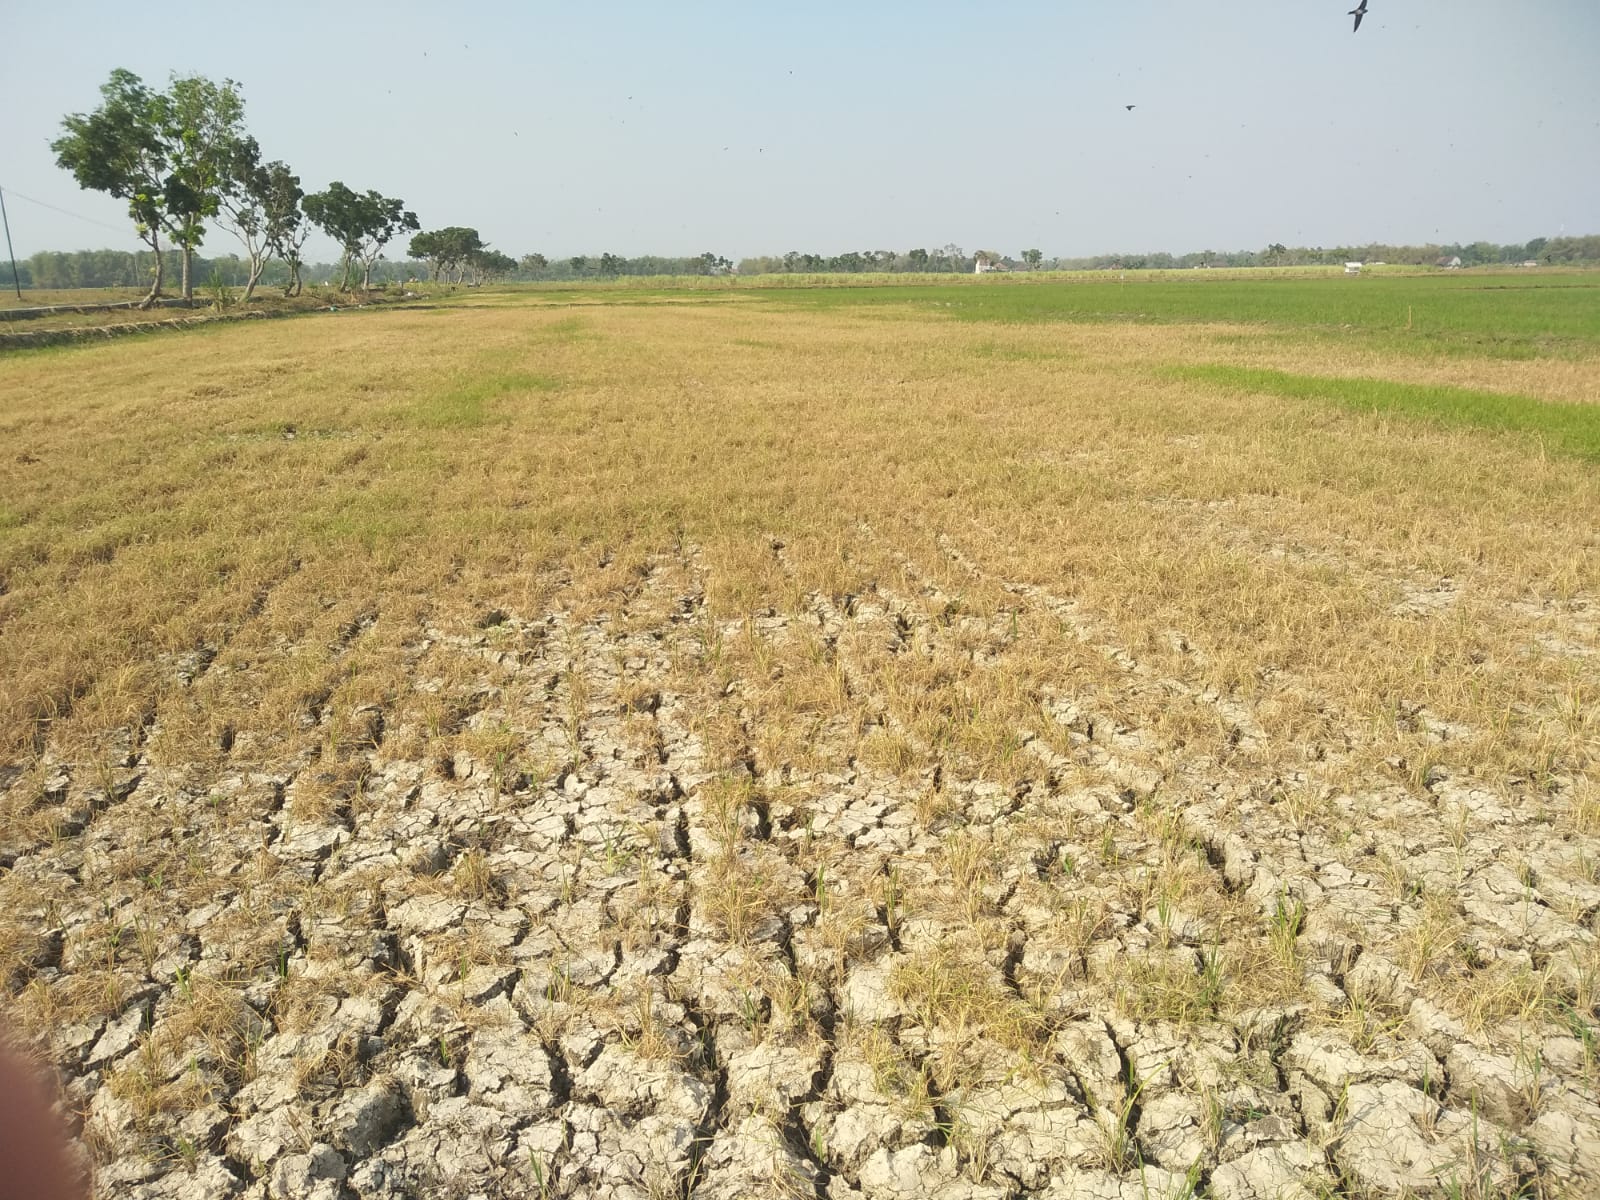 Sebagian besar wilayah Pati selatan para petani belum melakukan penanaman. Hal tersebut disebabkan musim hujan masih sangat kurang. Sehingga kondisi tanah masih terlihat kering. (Jurnalindo.com)